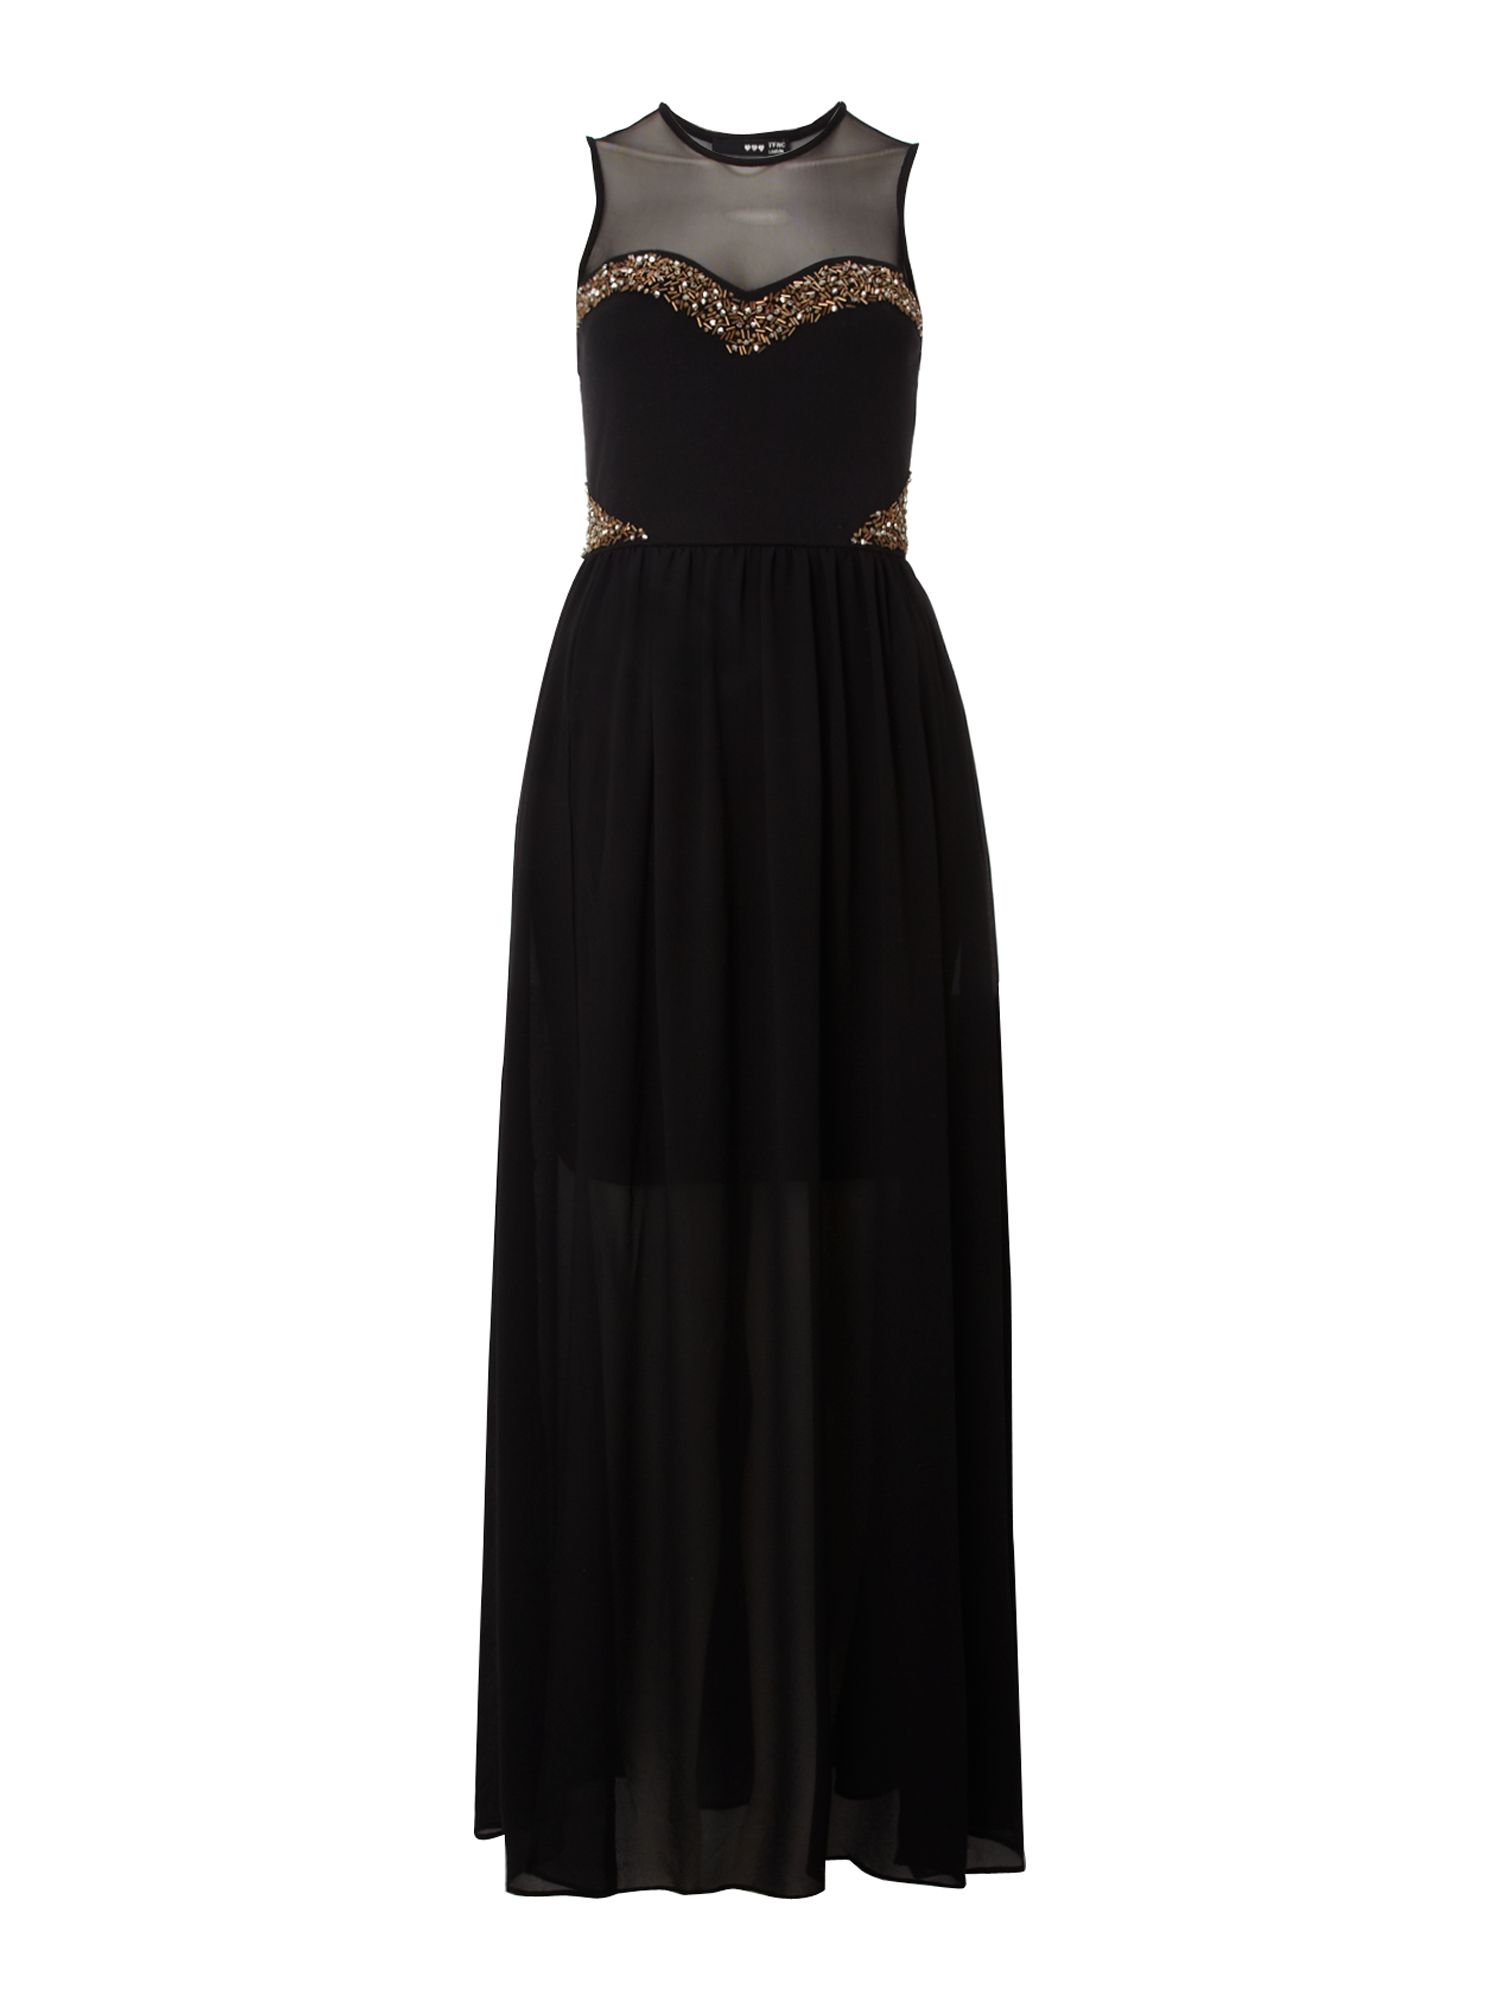 Tfnc london Maxi Embellished Dress in Black | Lyst